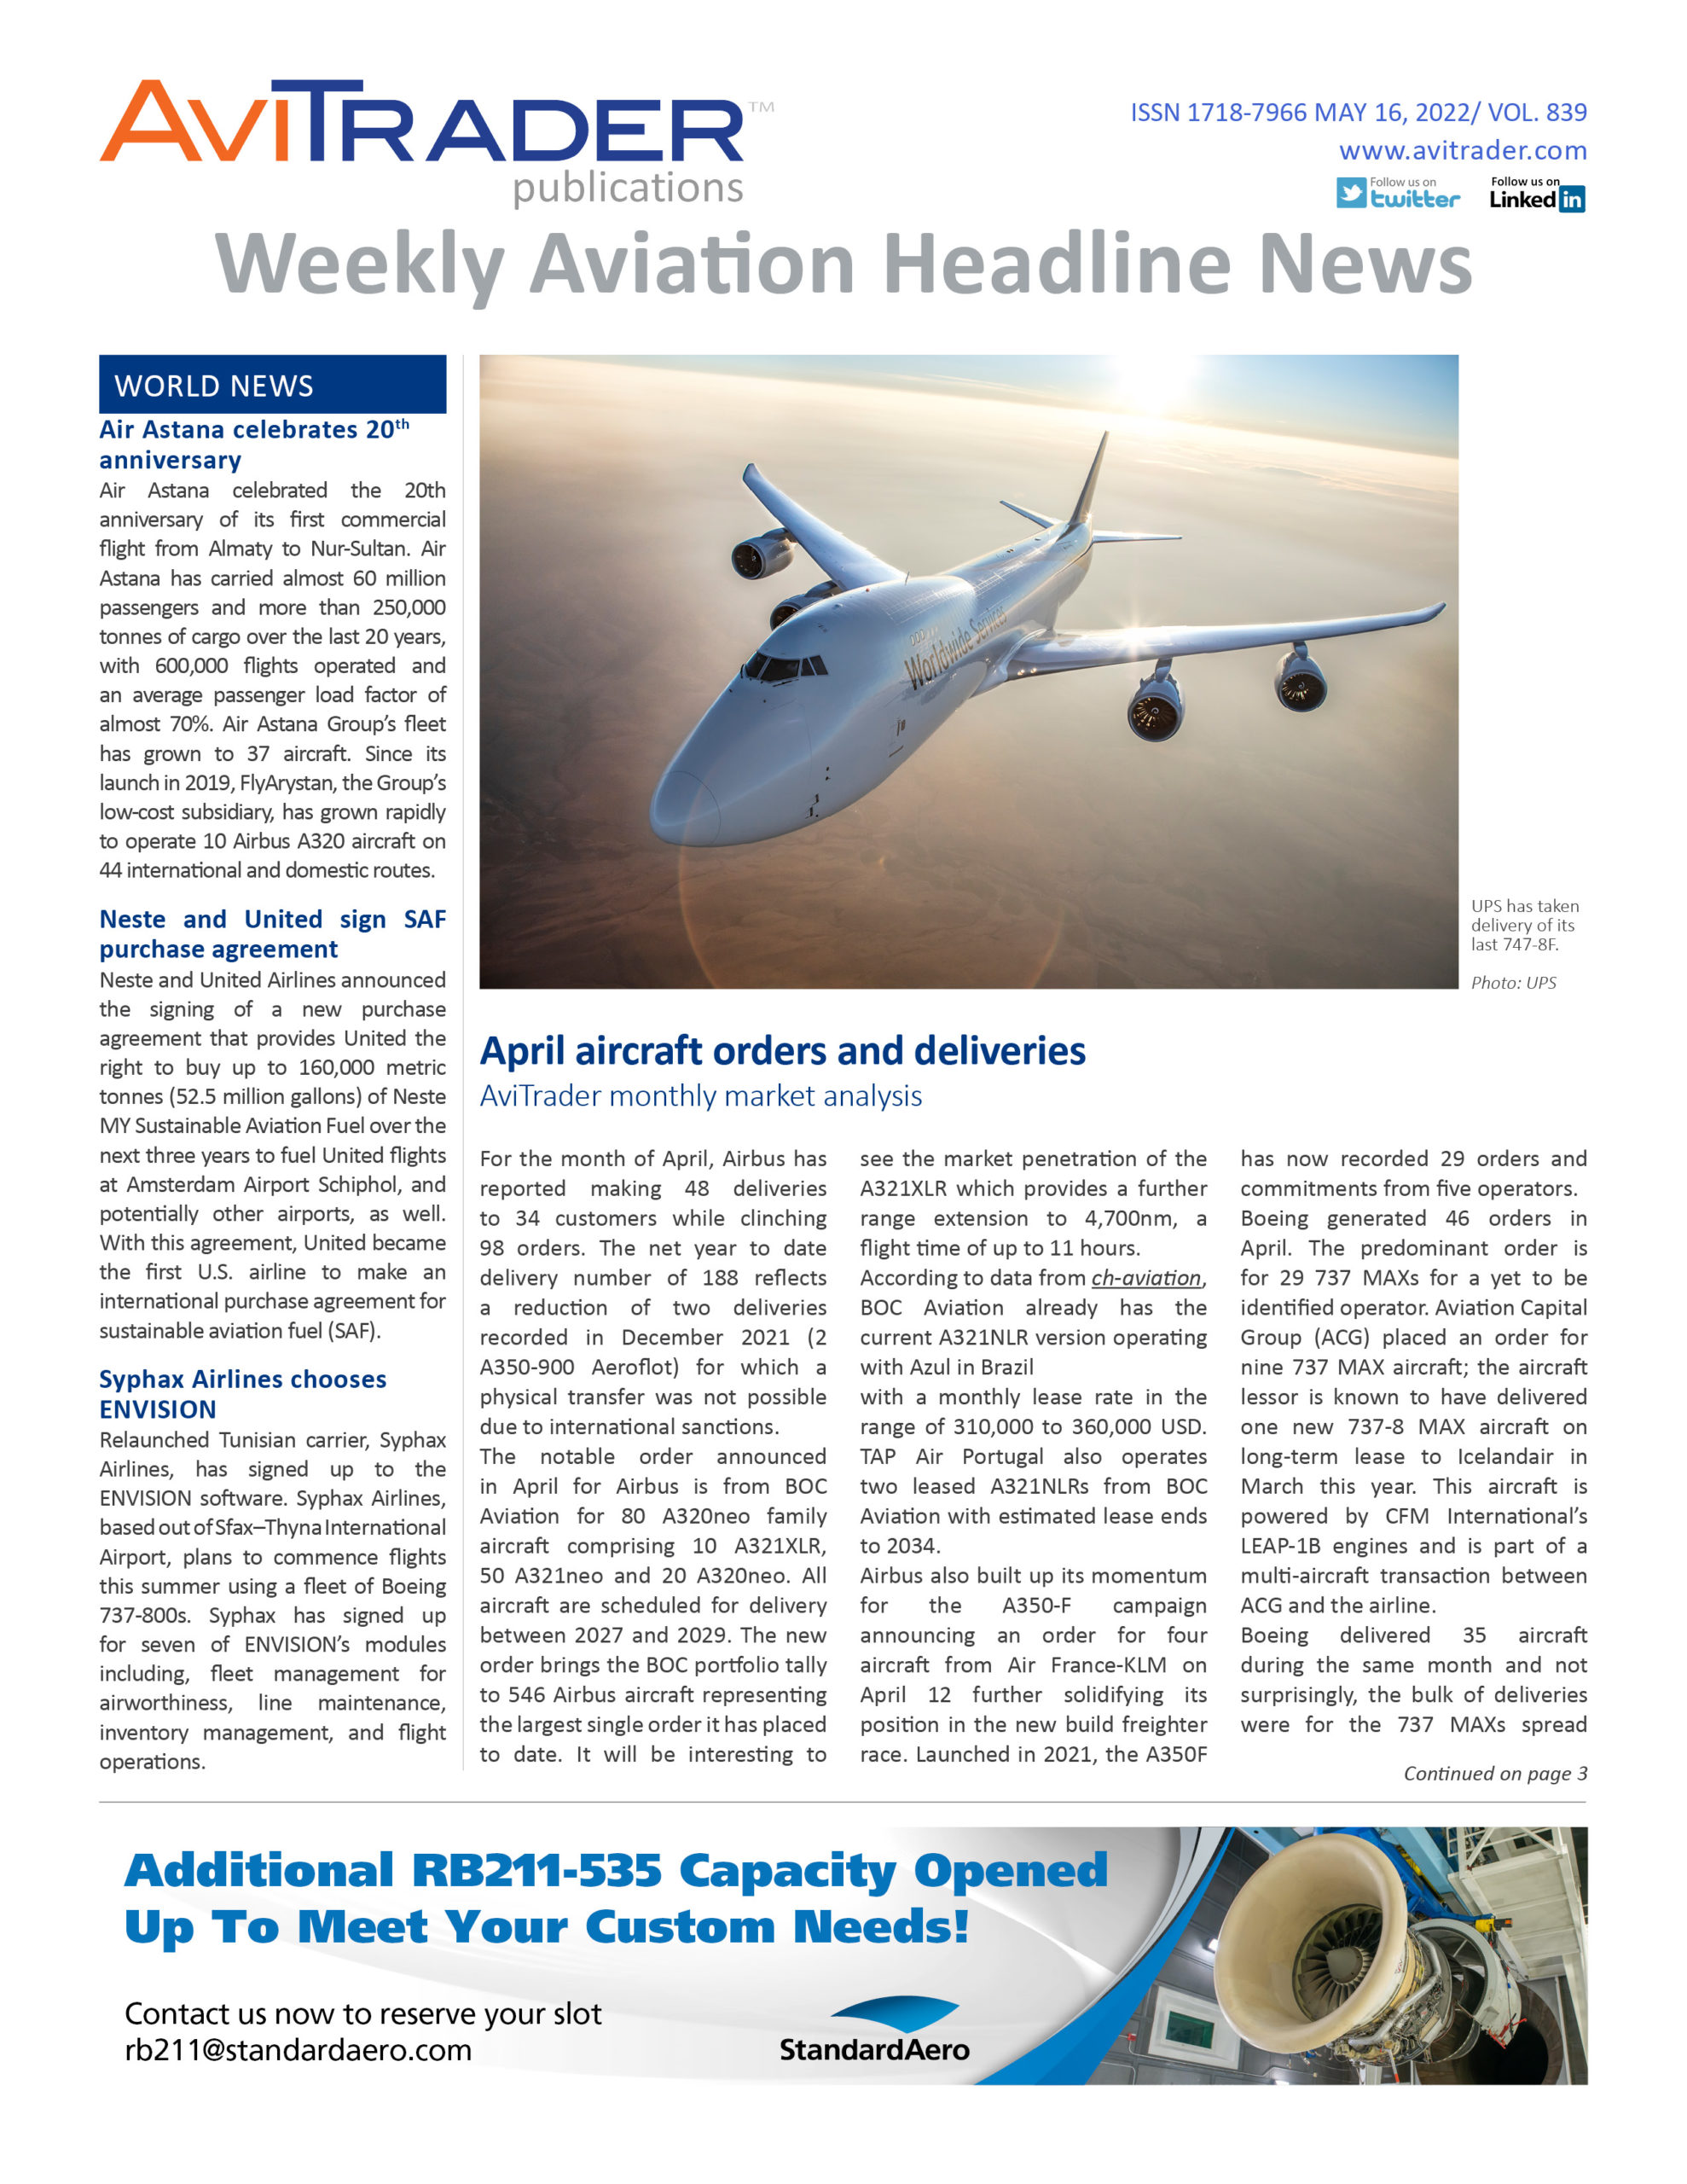 AviTrader_Weekly_Headline_News_Cover_2022-05-16